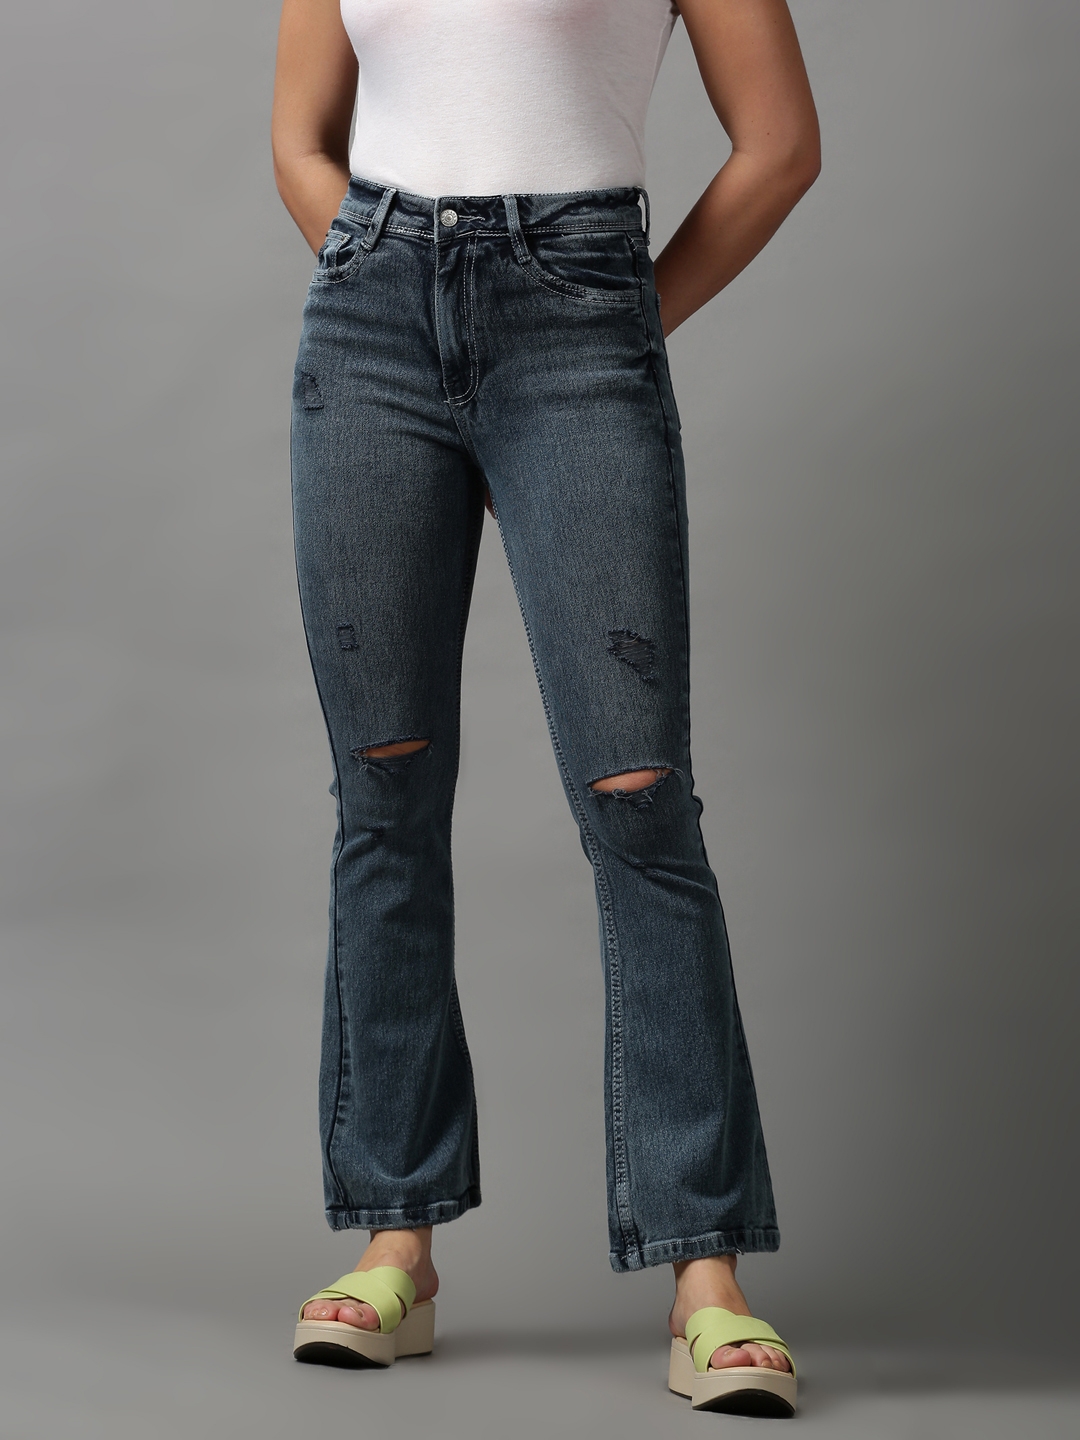 Women's Grey Denim Solid Jeans